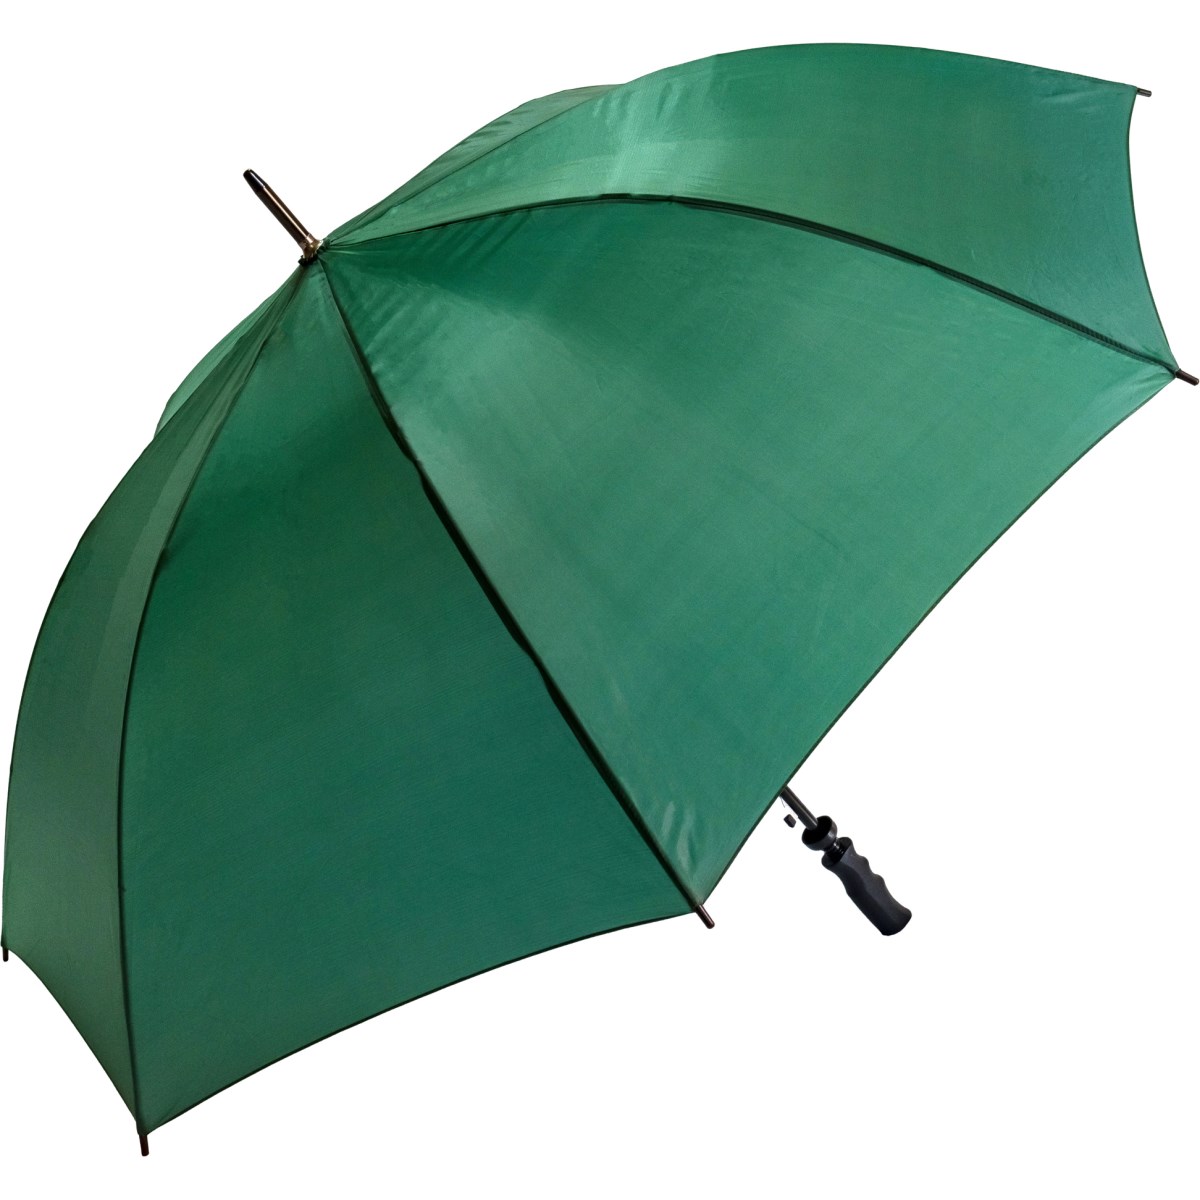 Fibrelight Large Green Golf Umbrella (3473P)